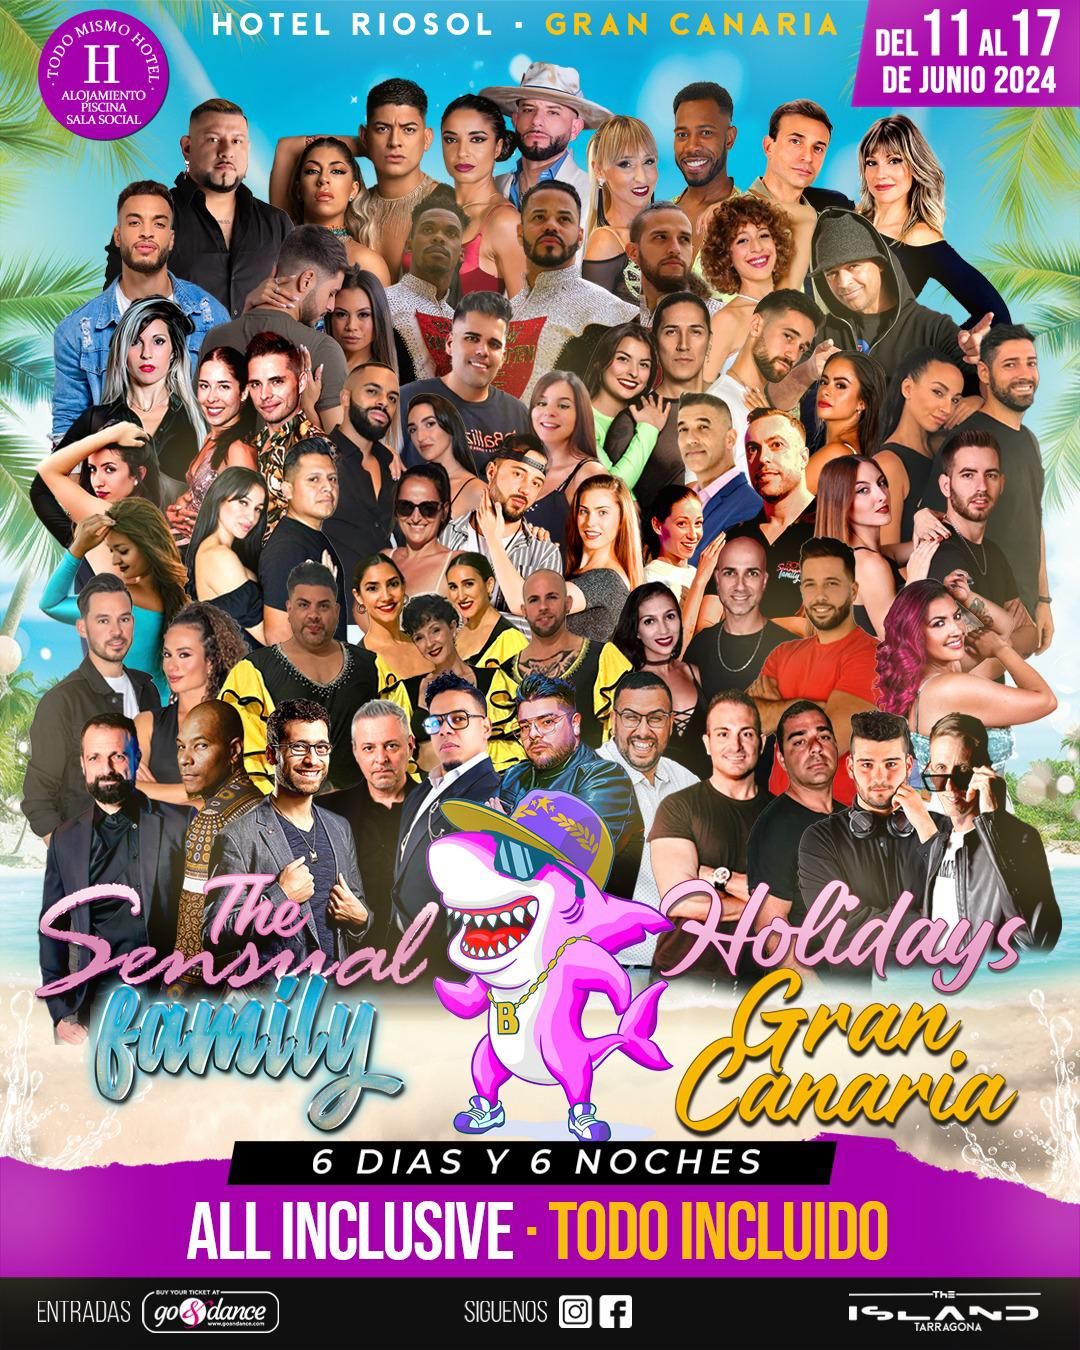 The Sensual Family Holidays 2024 Gran Canaria promocode DANCINGTOM